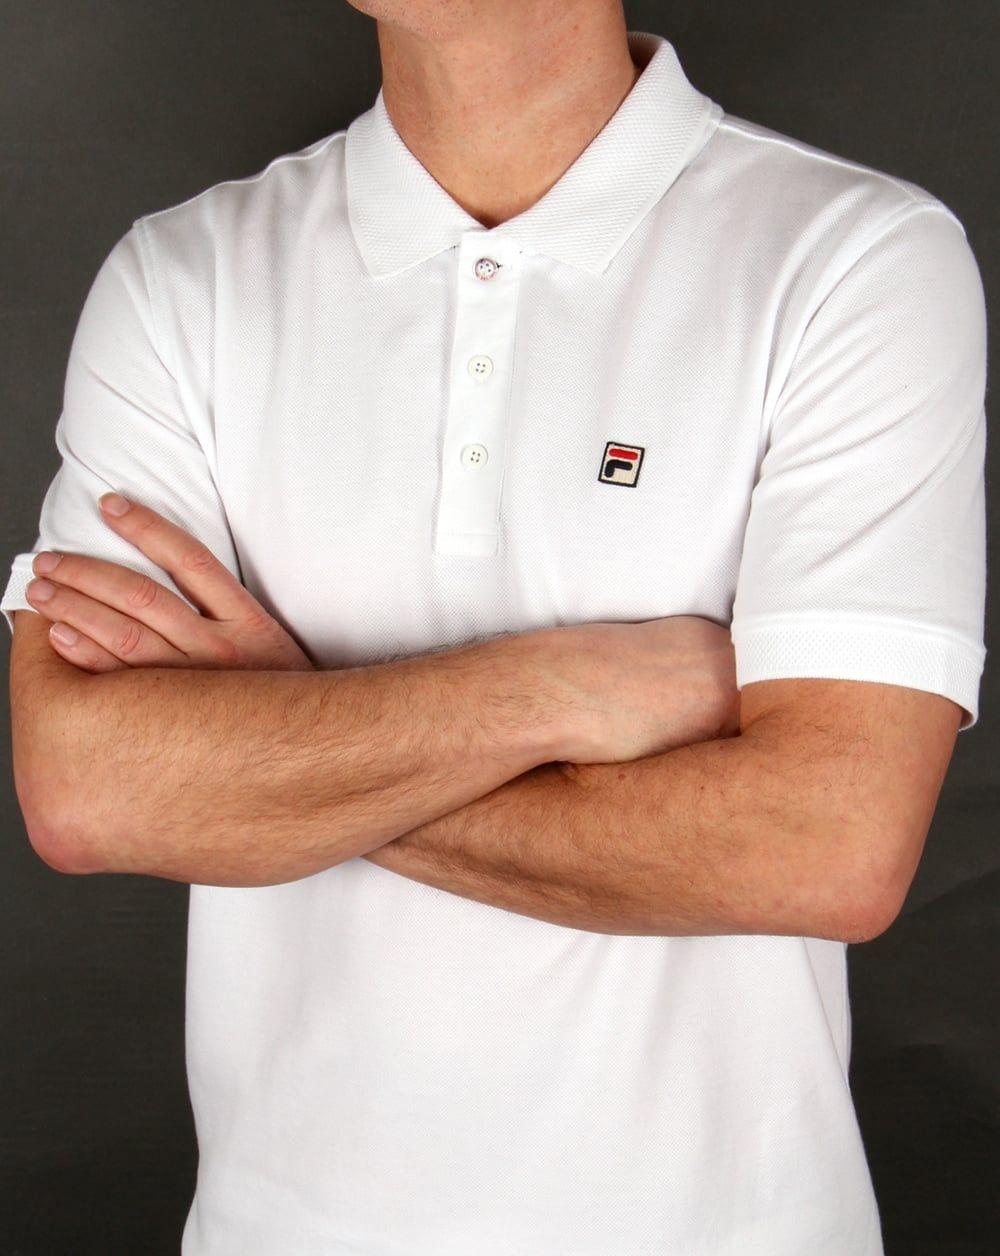 Red and White F Logo - Fila Vintage Brizzi Polo Shirt White, Men's, Pique, Cotton, Top